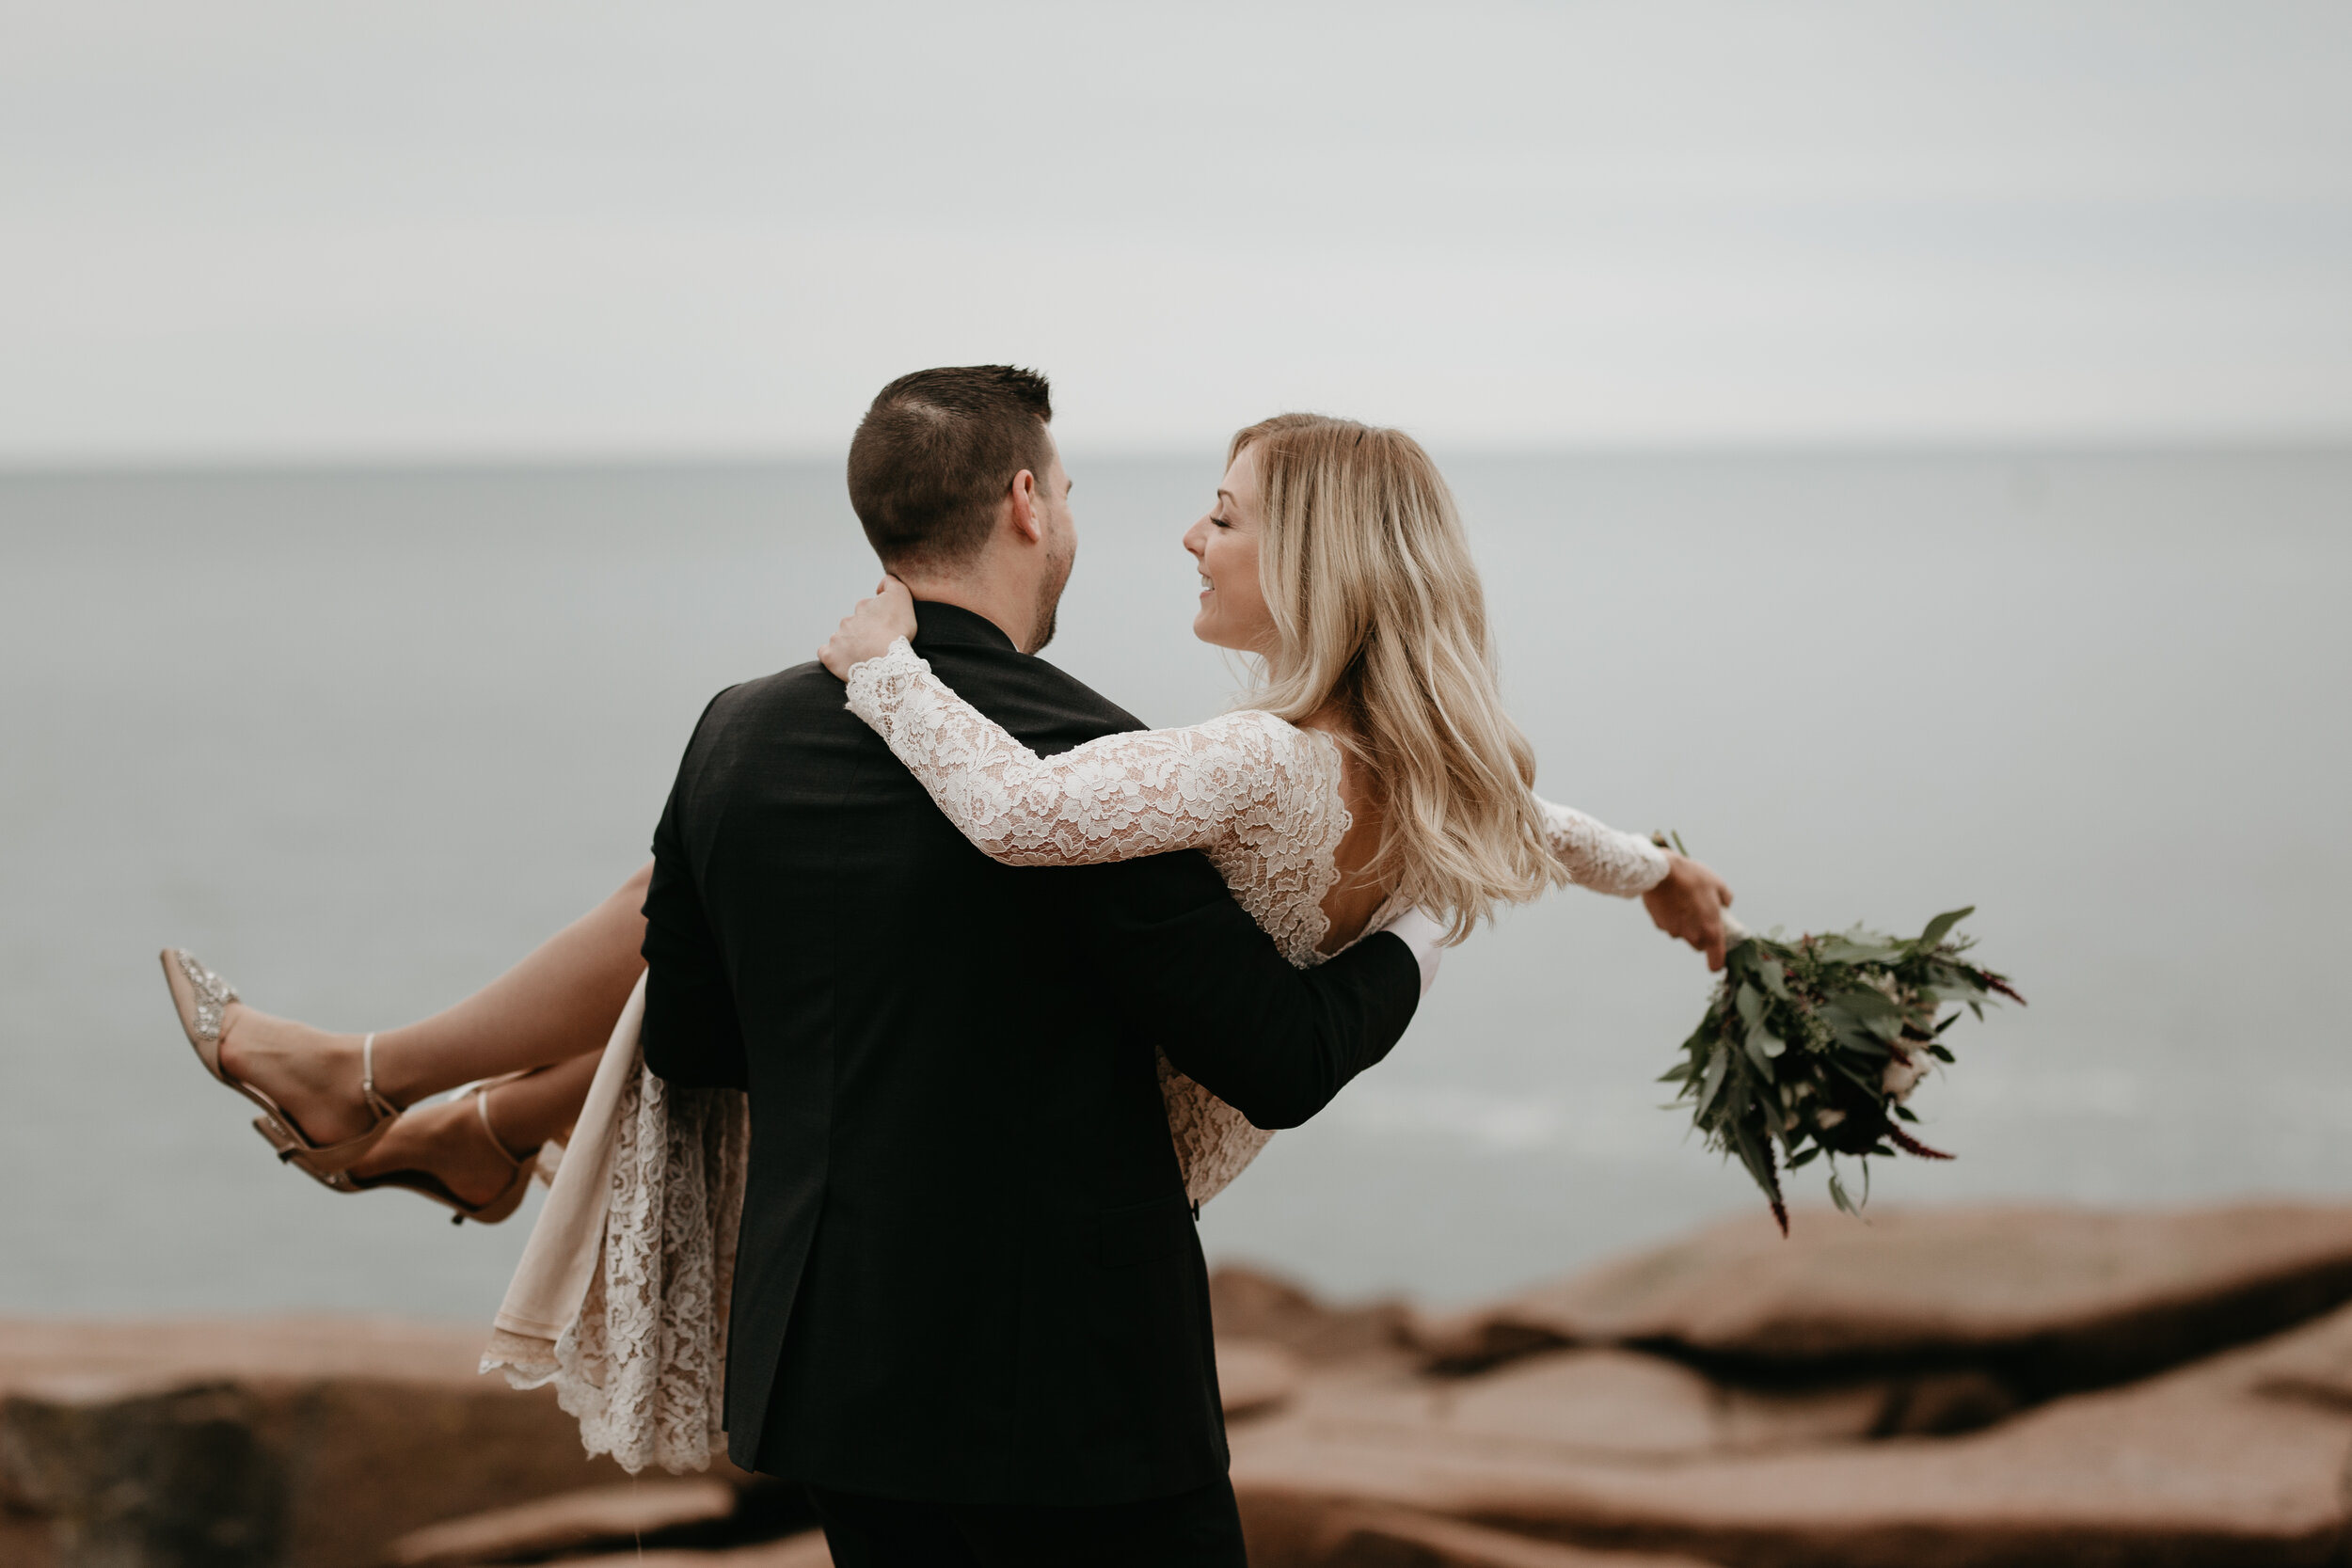 Nicole-Daacke-Photography-Acadia-national-park-elopement-photography-elopement-in-acadia-inspiration-maine-intimate-wedding-destination-elopement-photographer-rainy-day-maine-coast-bar-harbor-elopement-photography-166.jpg